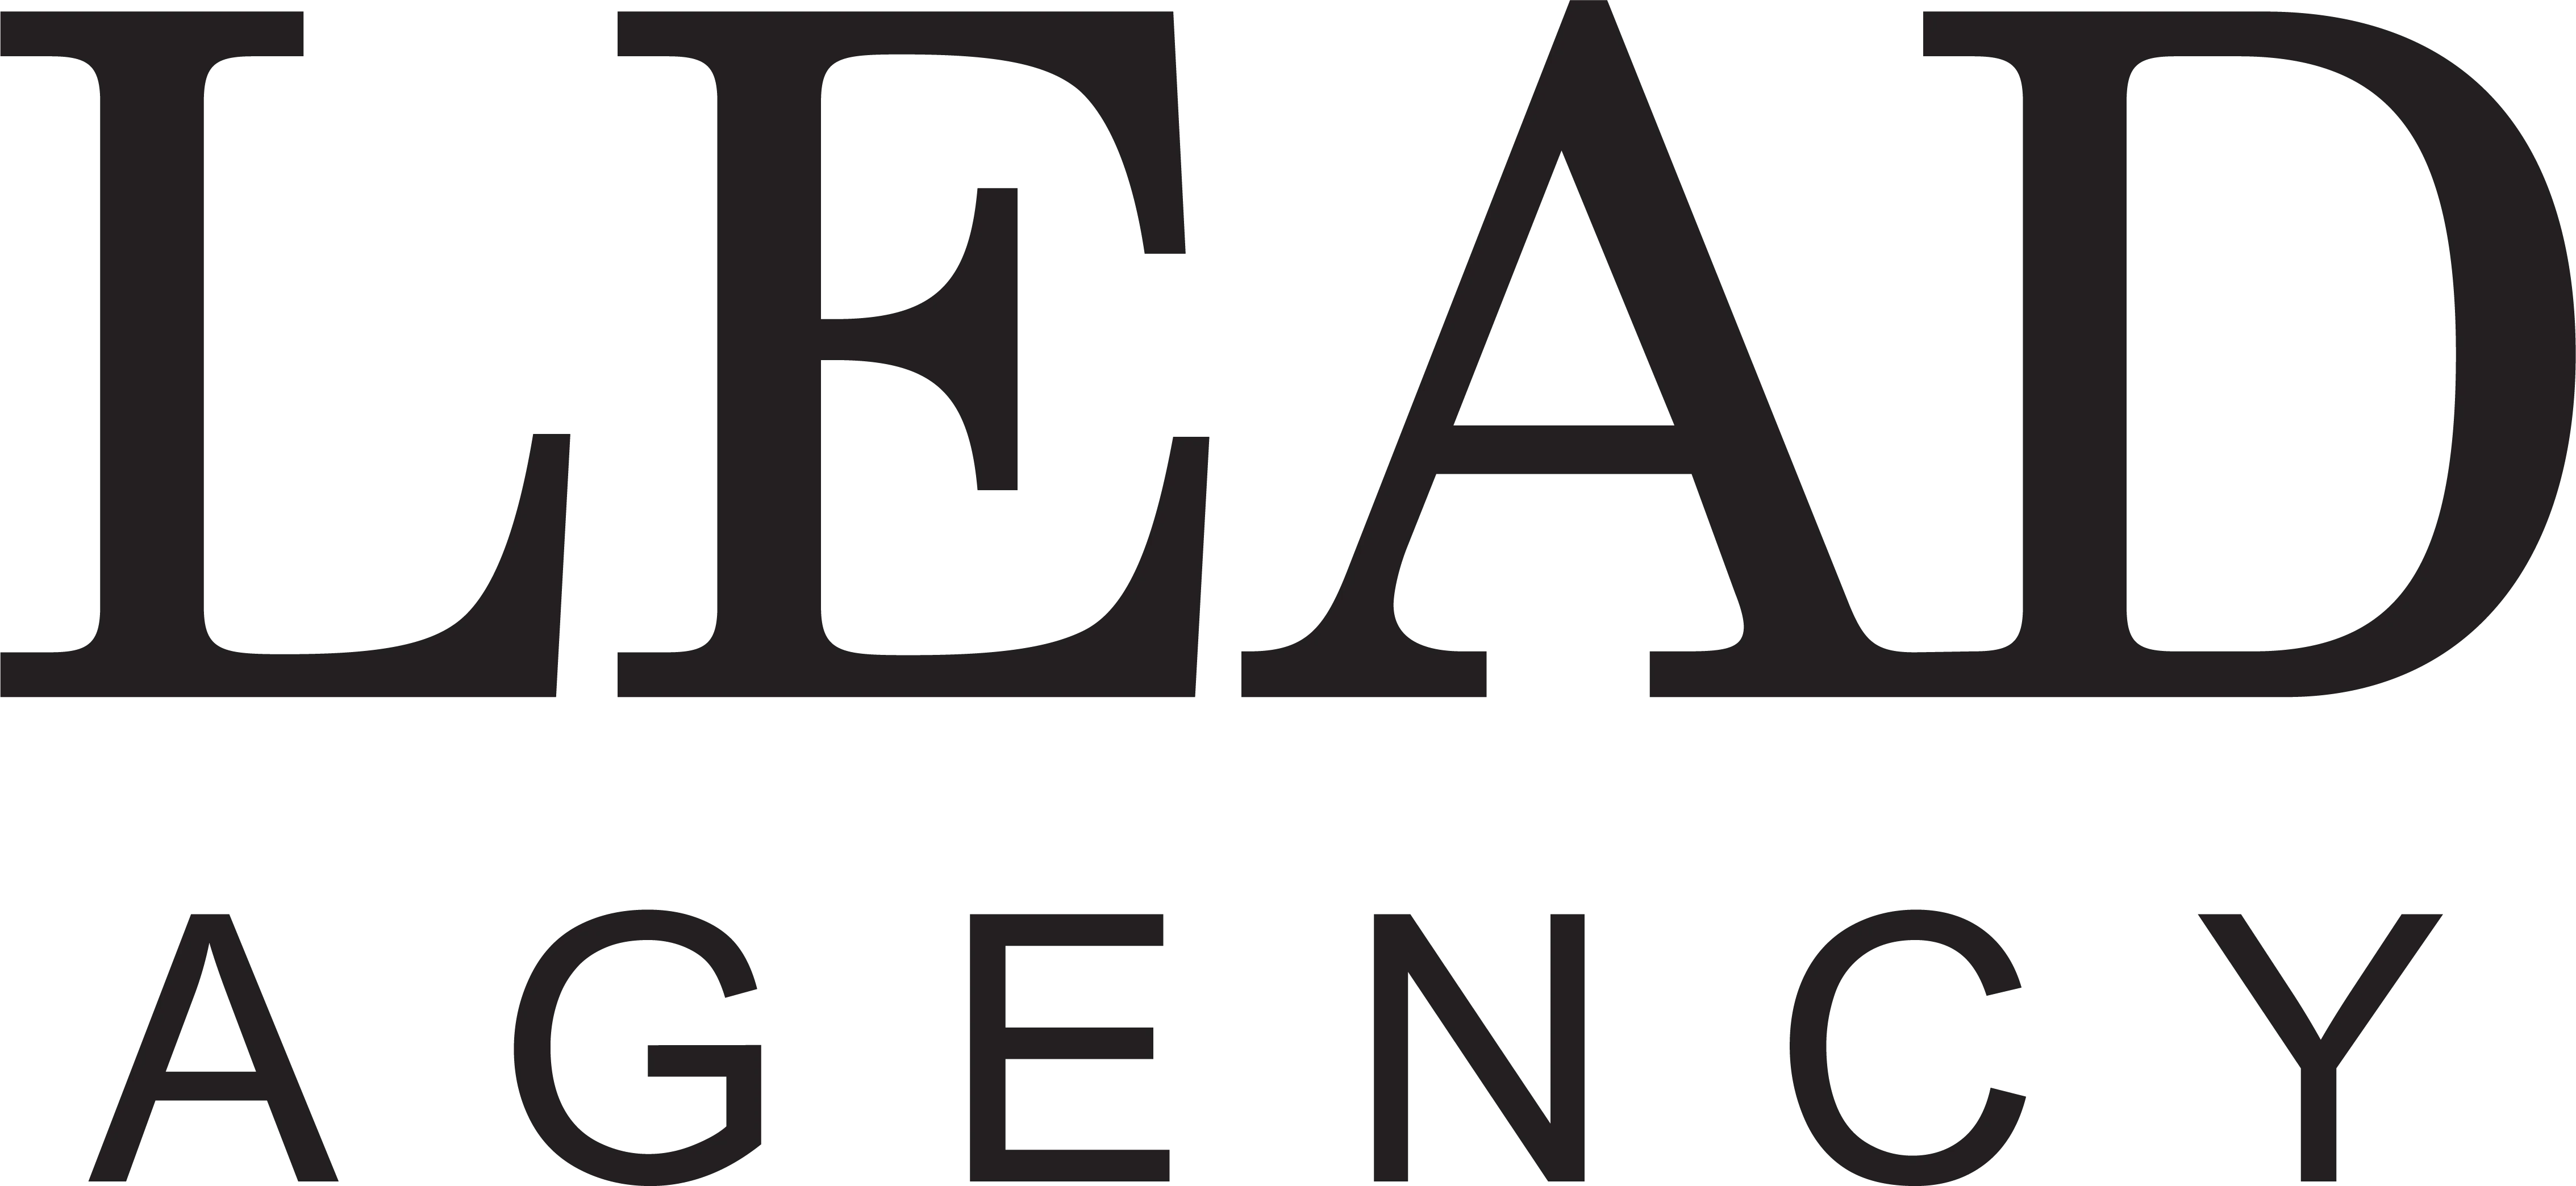 Lead agency Pr agencies in denmark